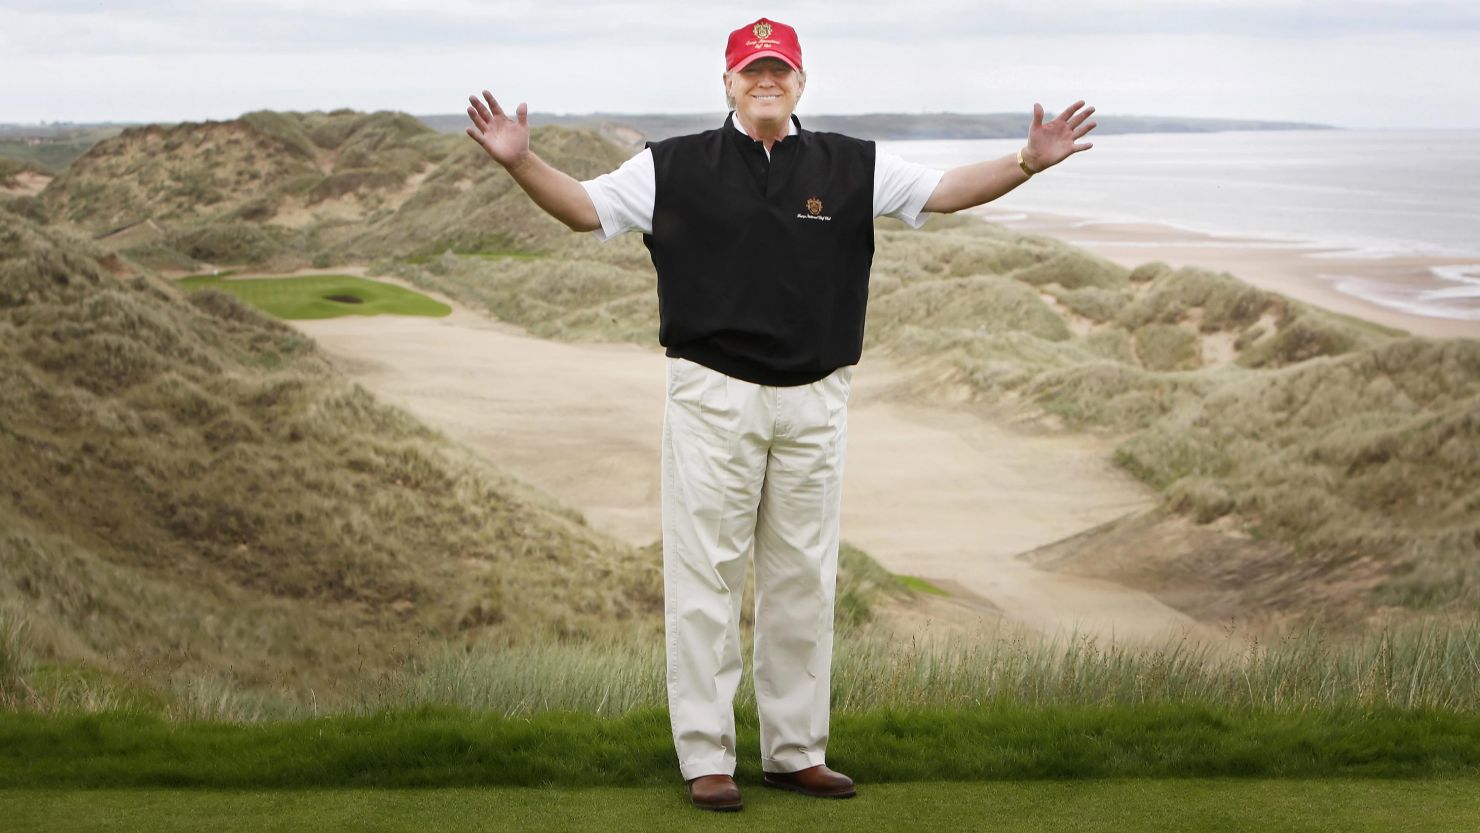 Donald Trump at the Menie Estate in Aberdeenshire, Scotland, in June 2011.